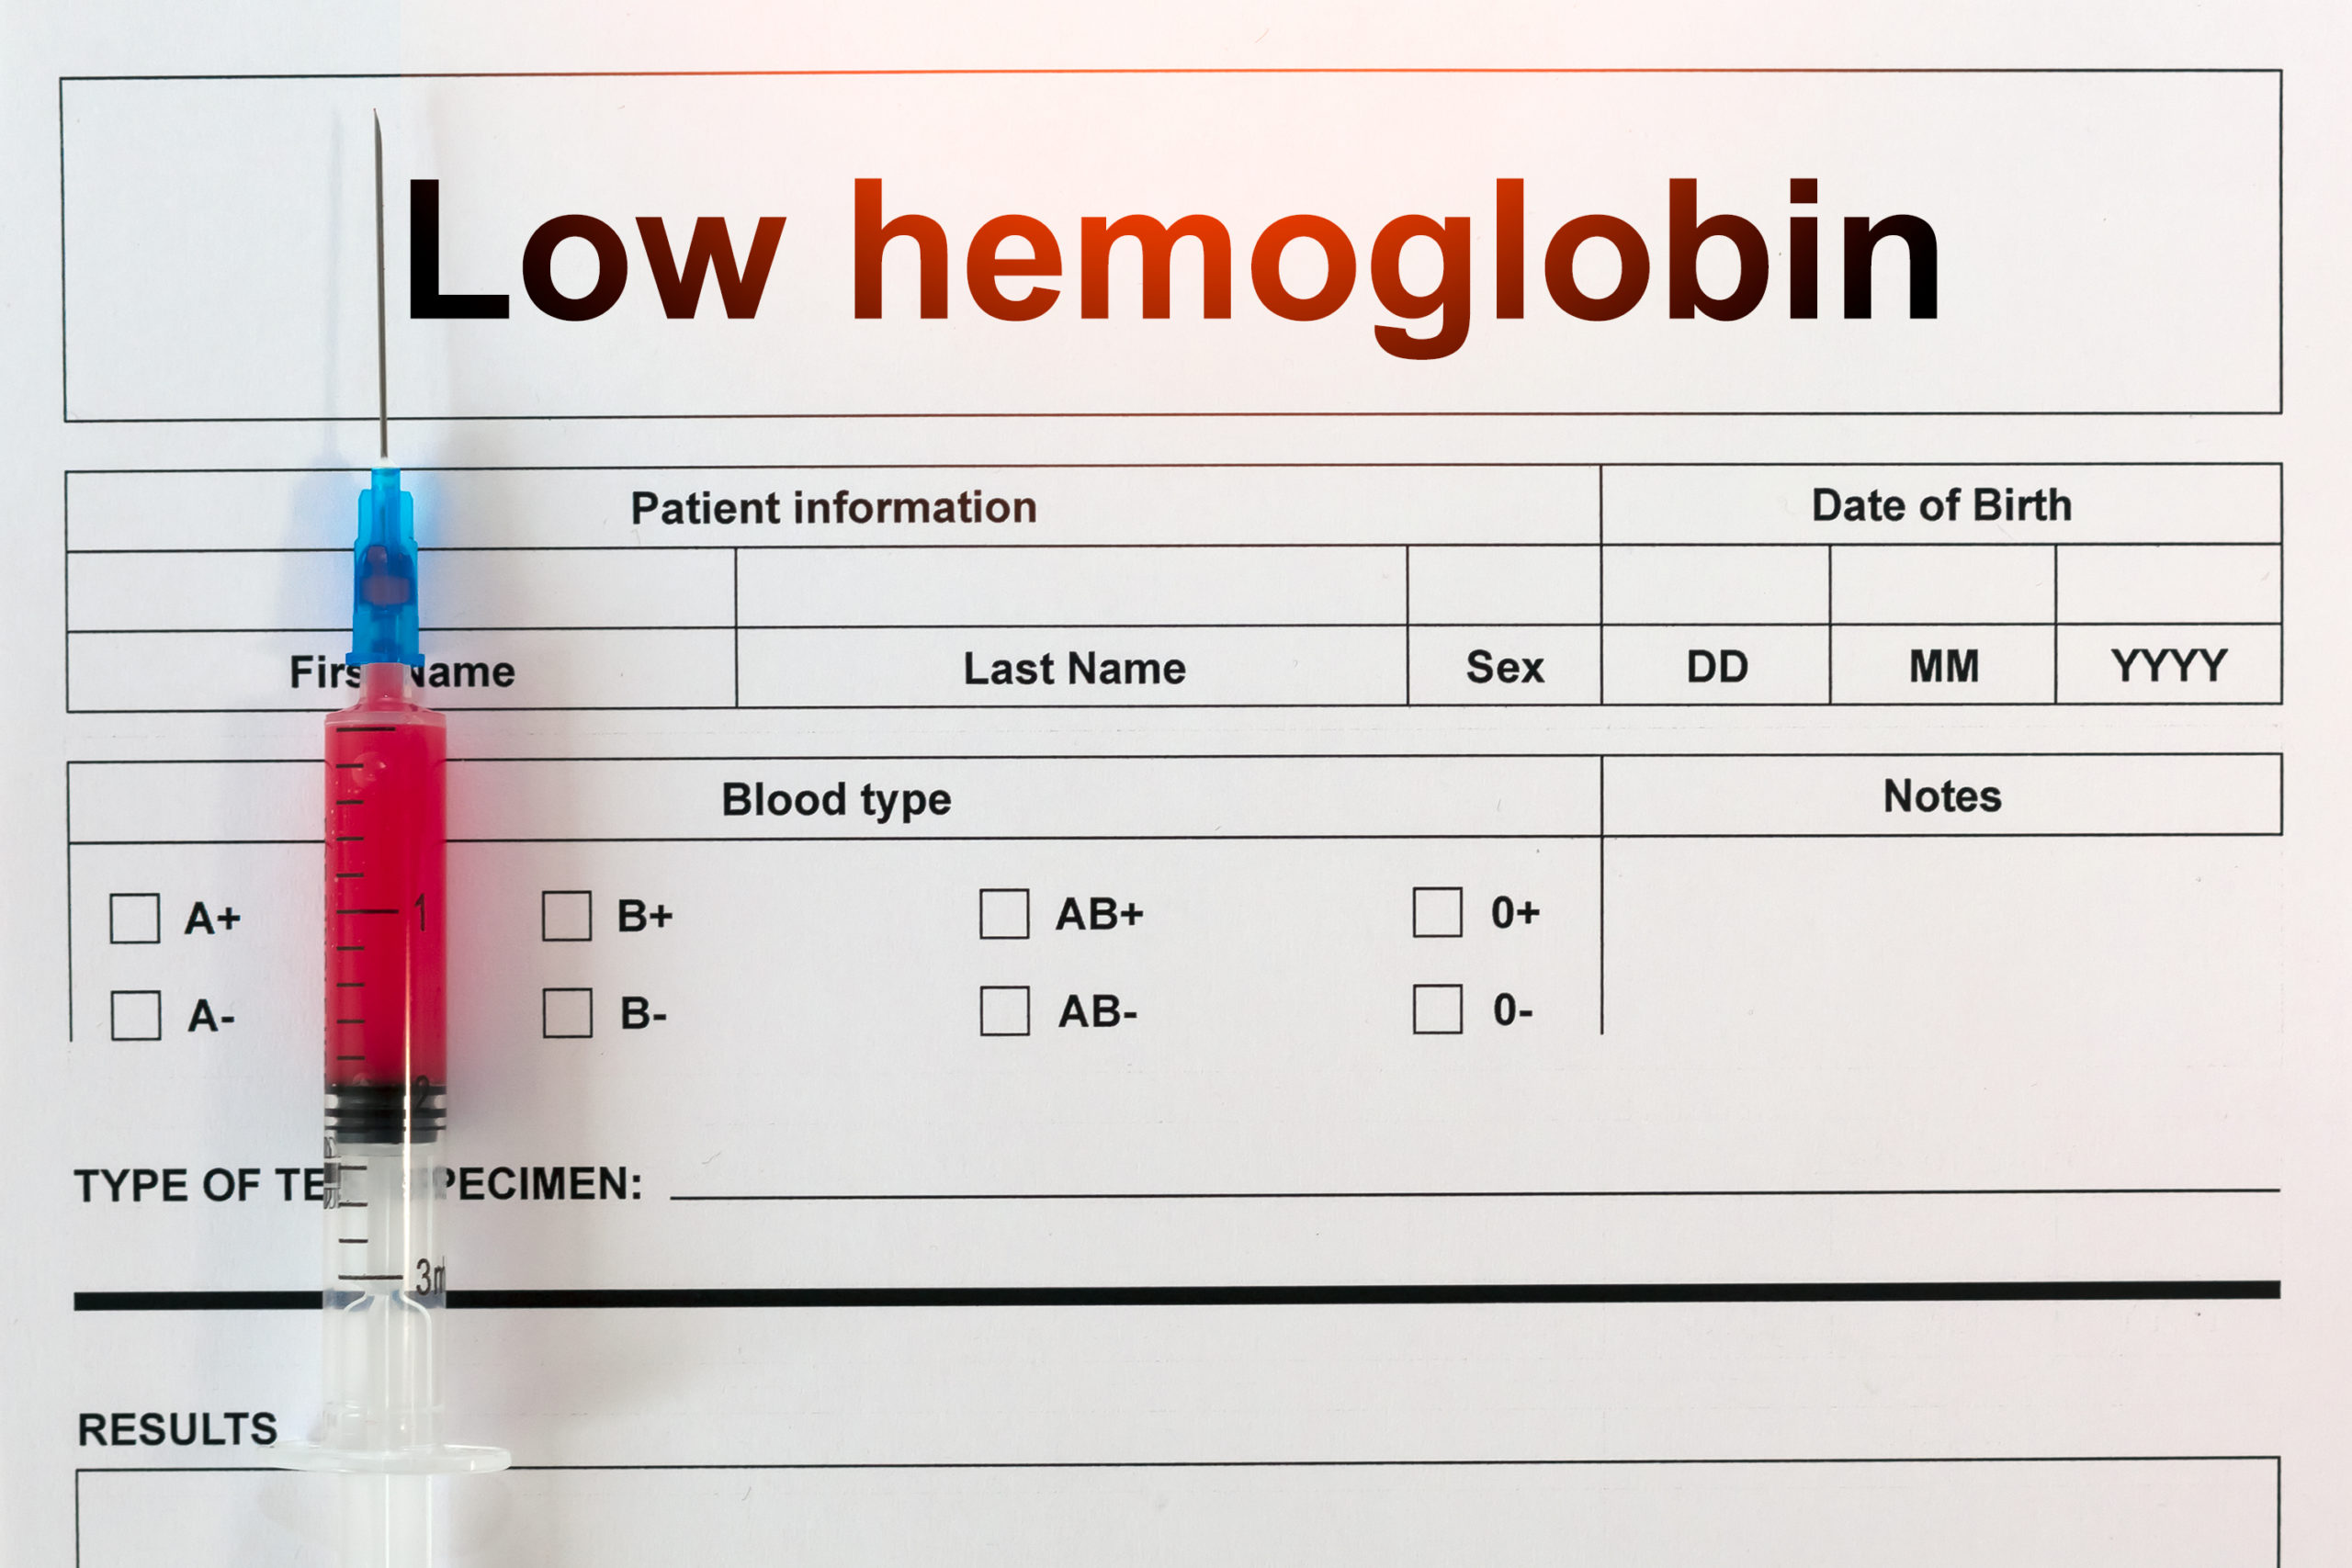 can cirrhosis cause low hematocrit and hemoglobin